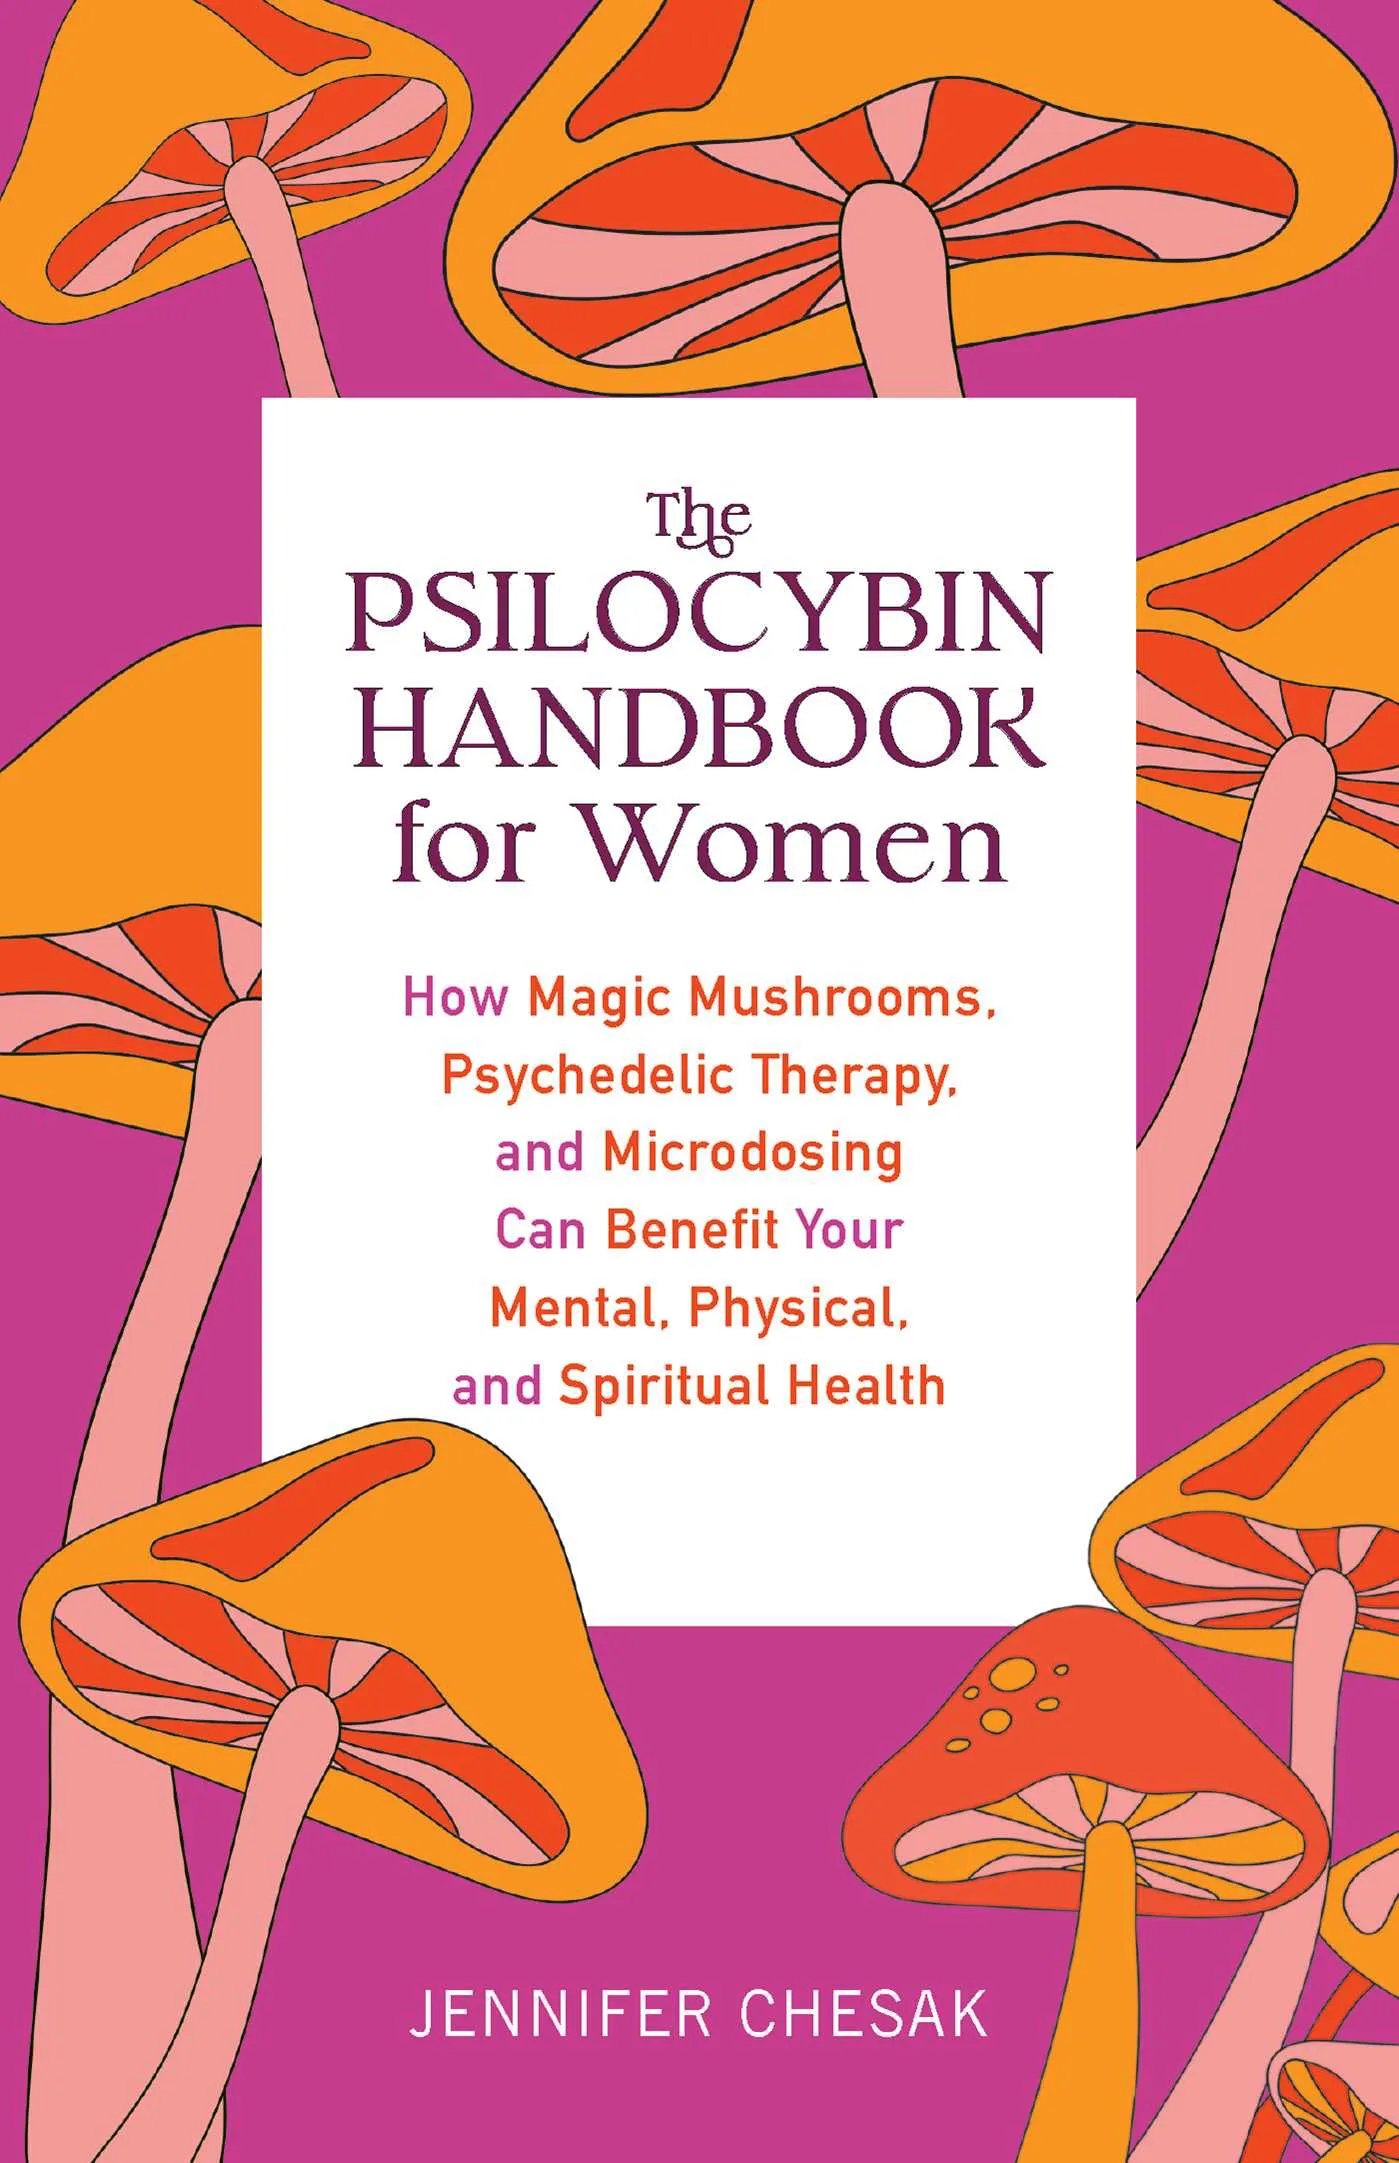 The Psilocybin Handbook for Women by Jennifer Chesak